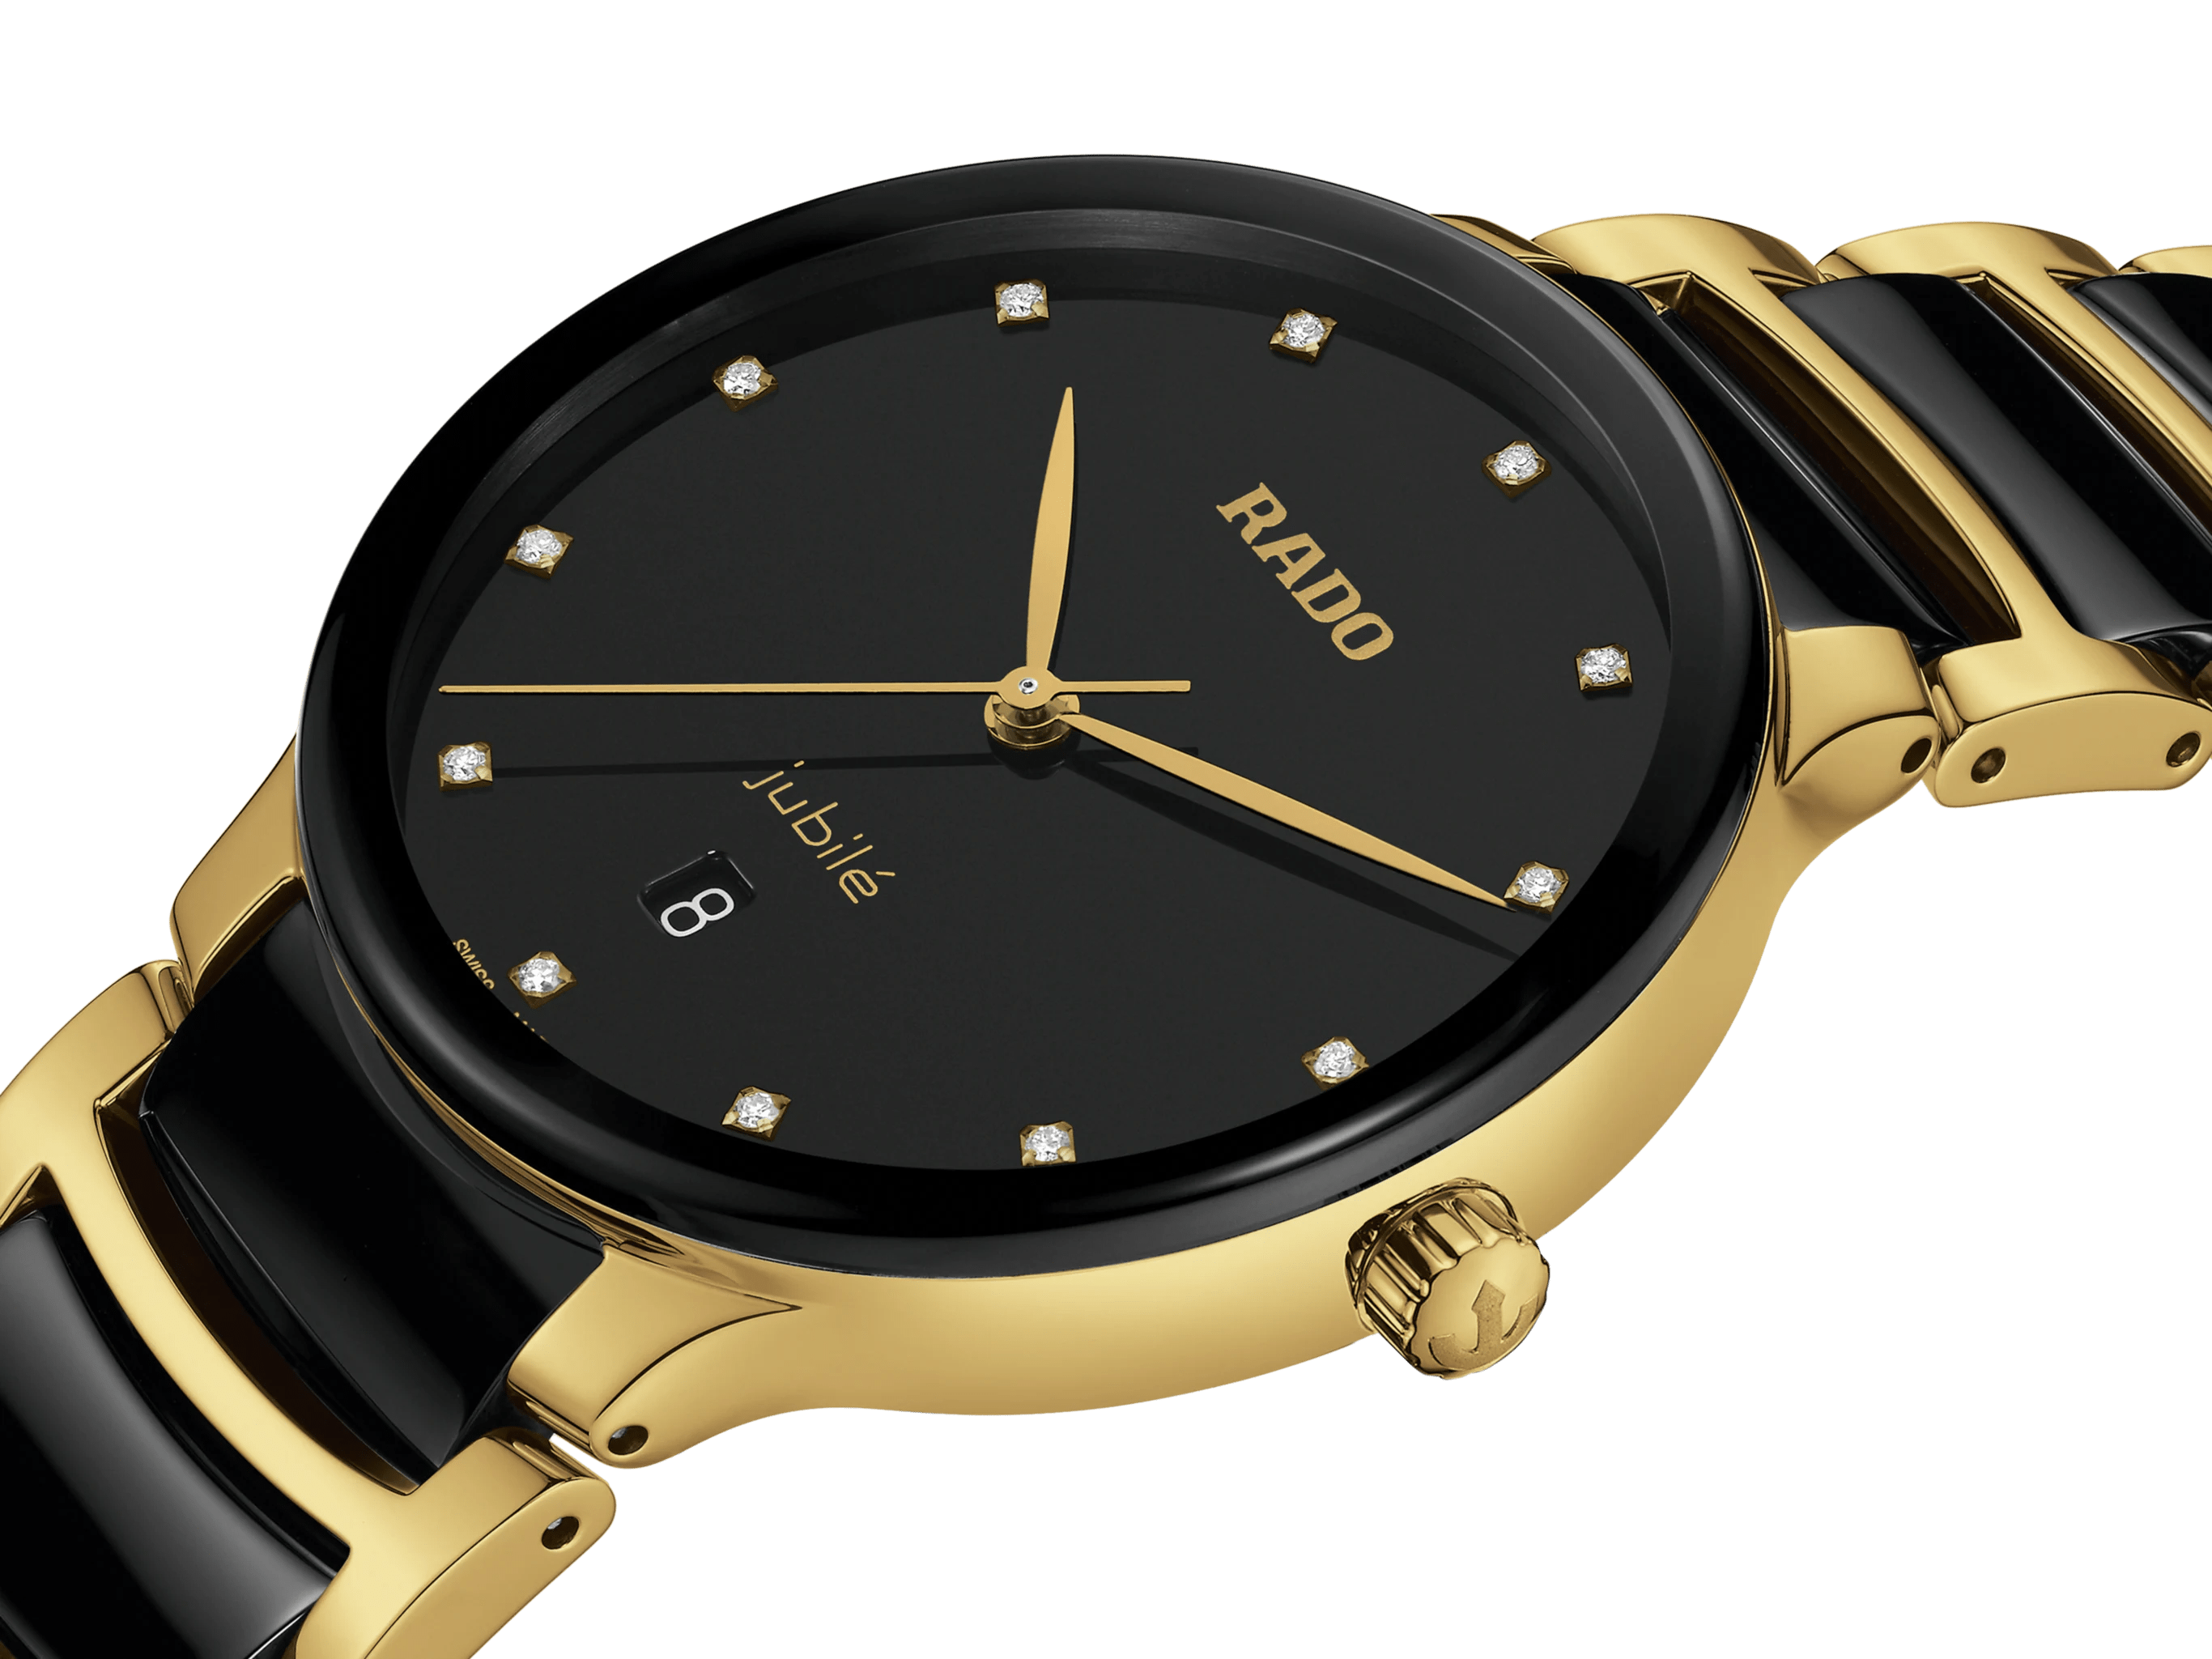 RADO Centrix Diamonds 39.5mm Gold-Black Men's Watch R30022742